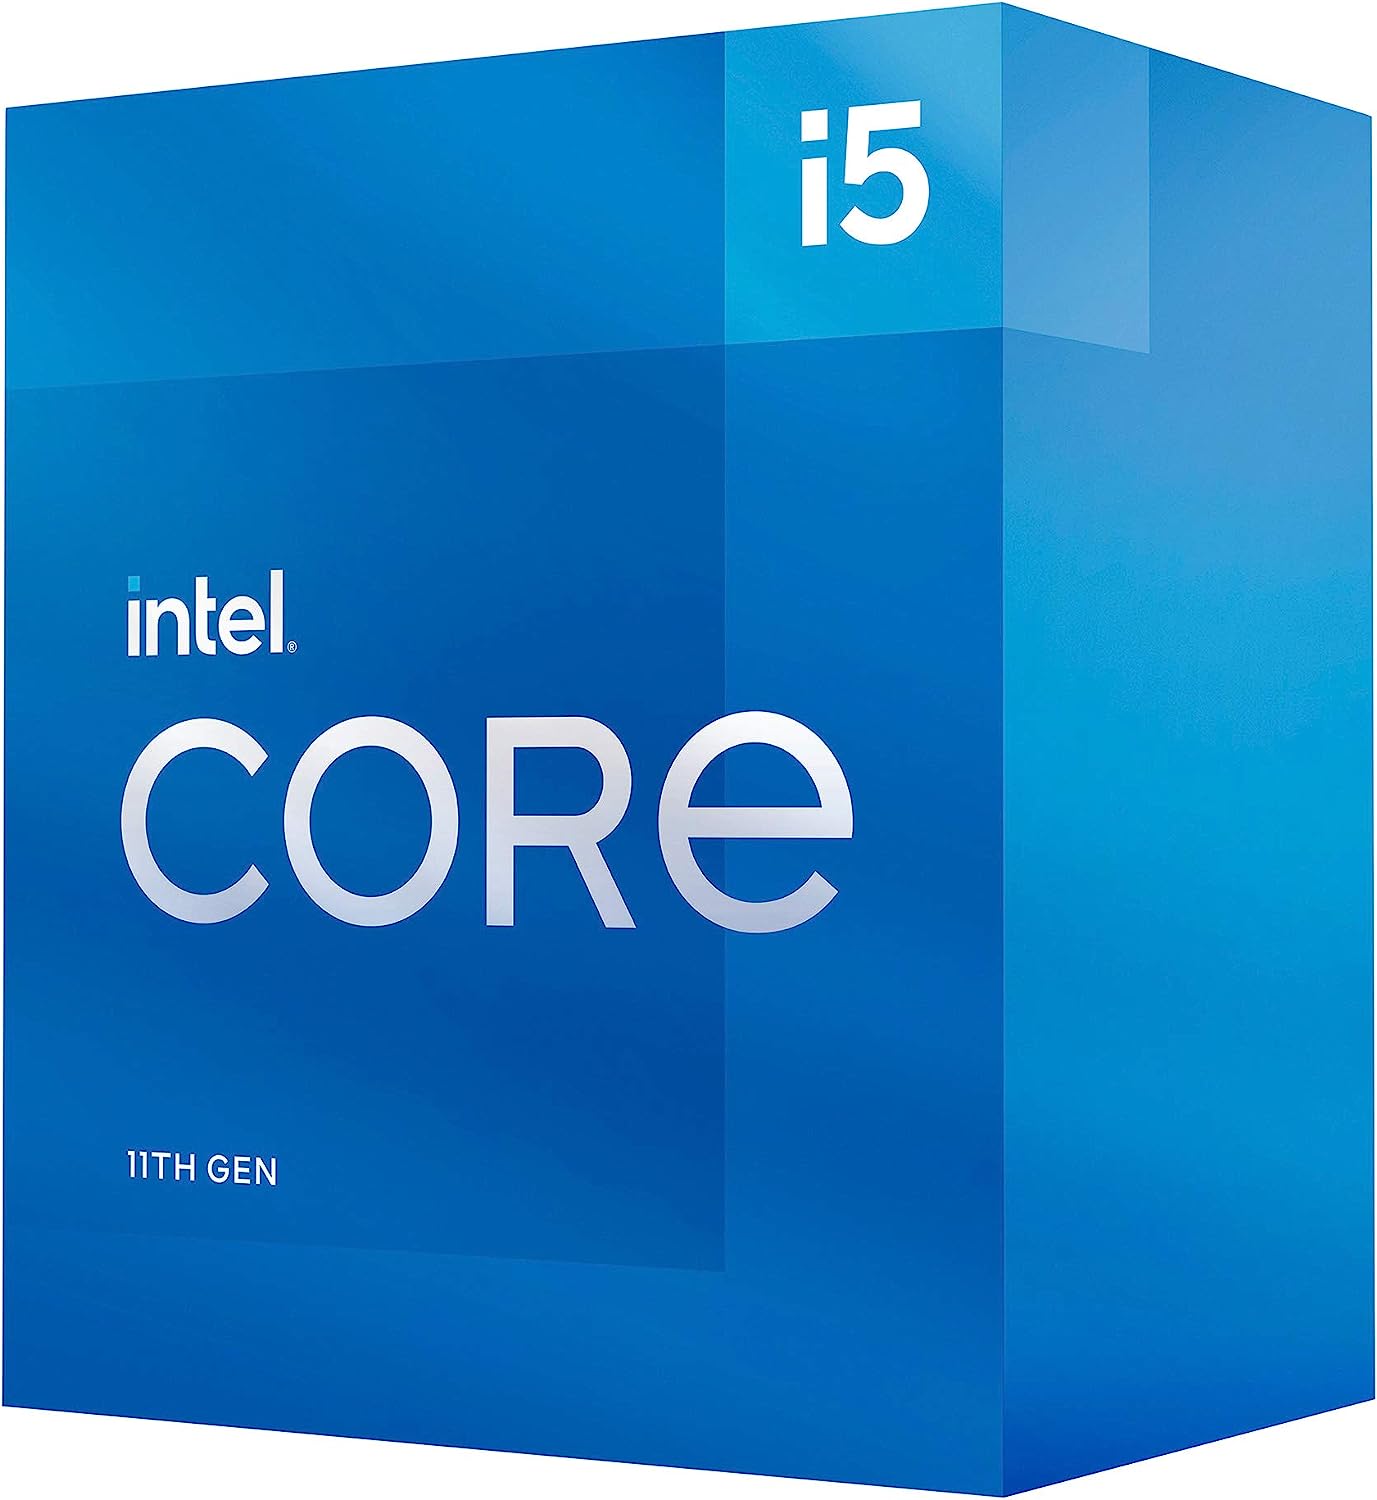 intel i5 processor product review